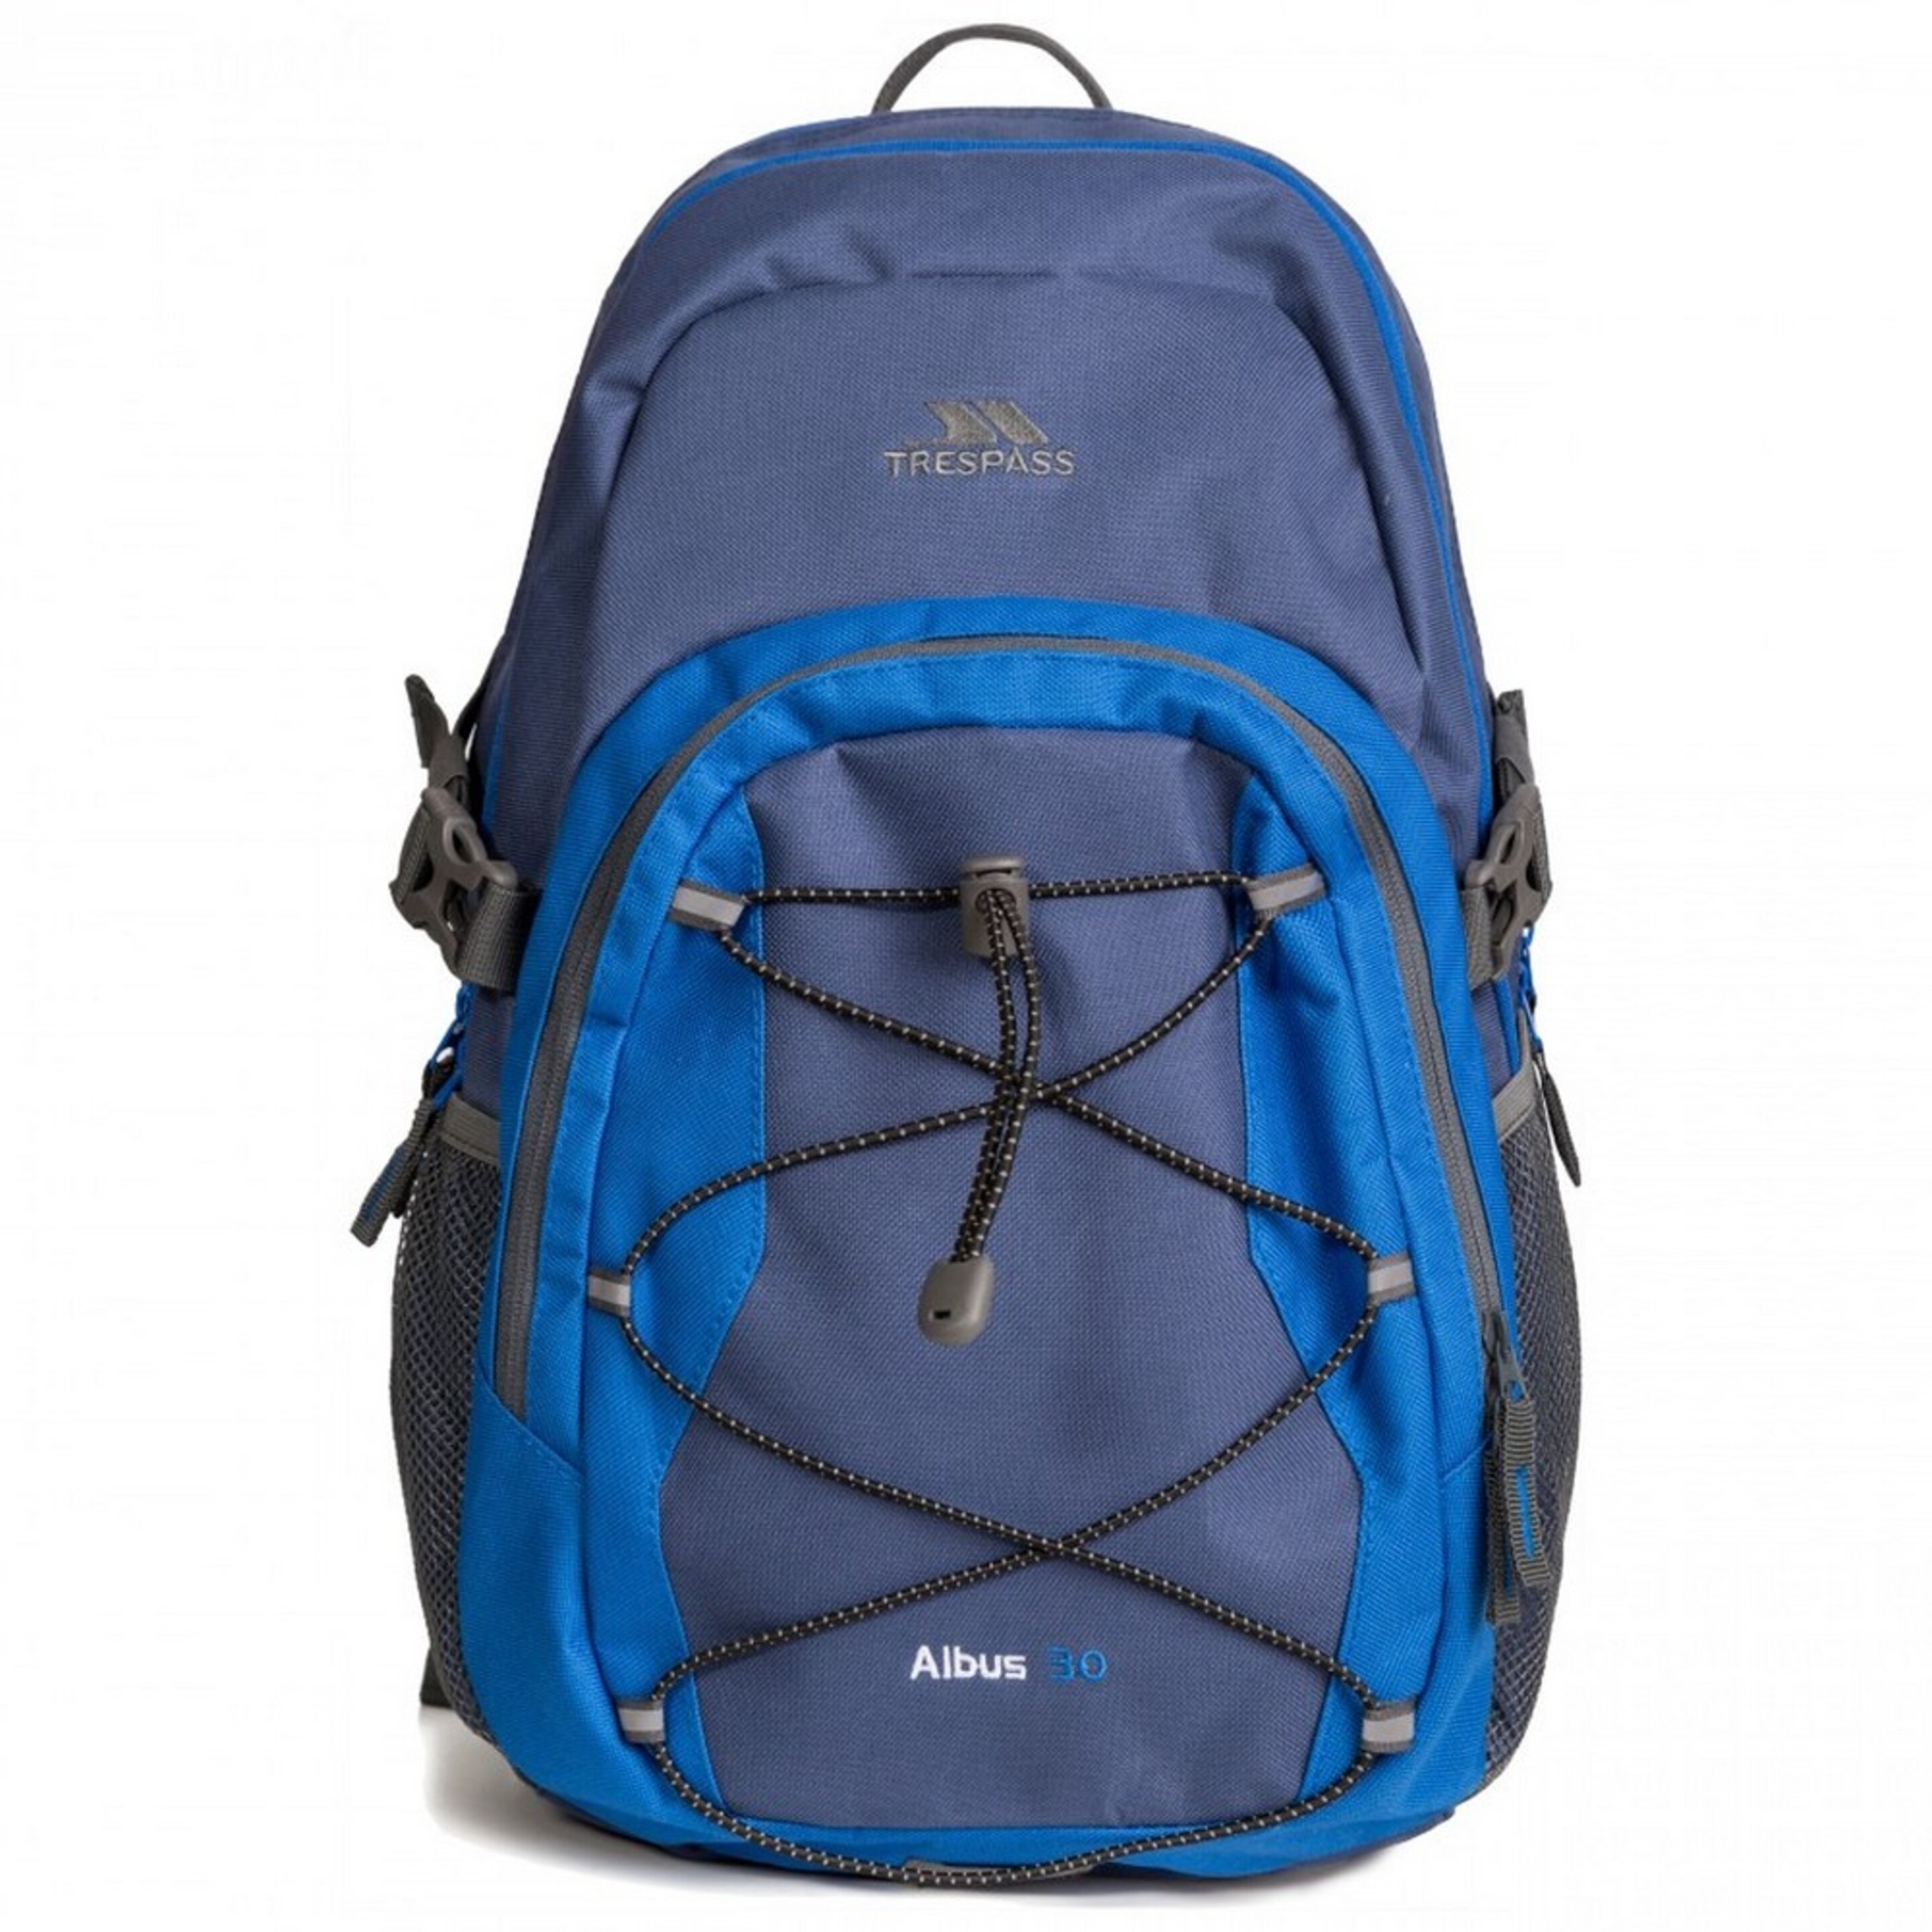 Albus 30 Litre Casual Rucksack/backpack Trespass (Azul)